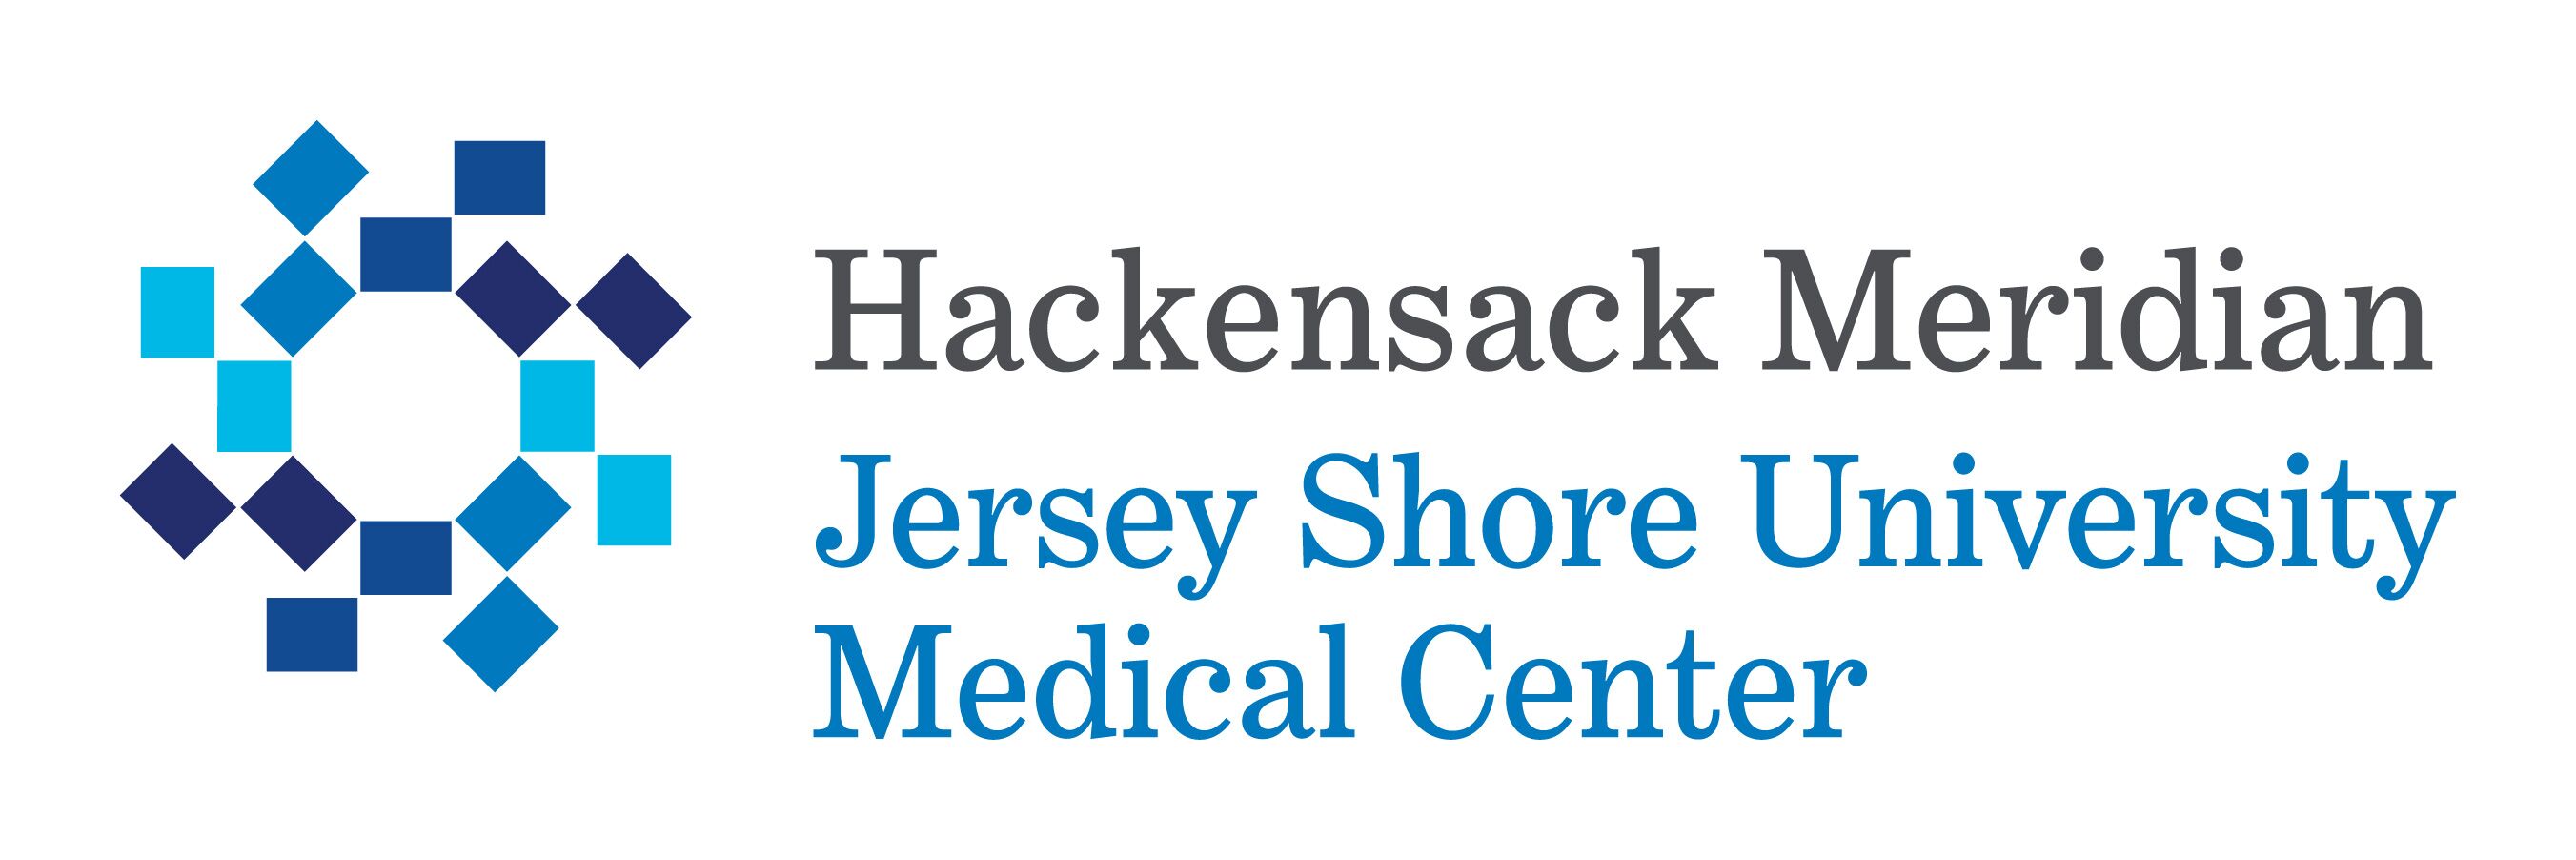 Jersey Shore University Medical Center
                  logo